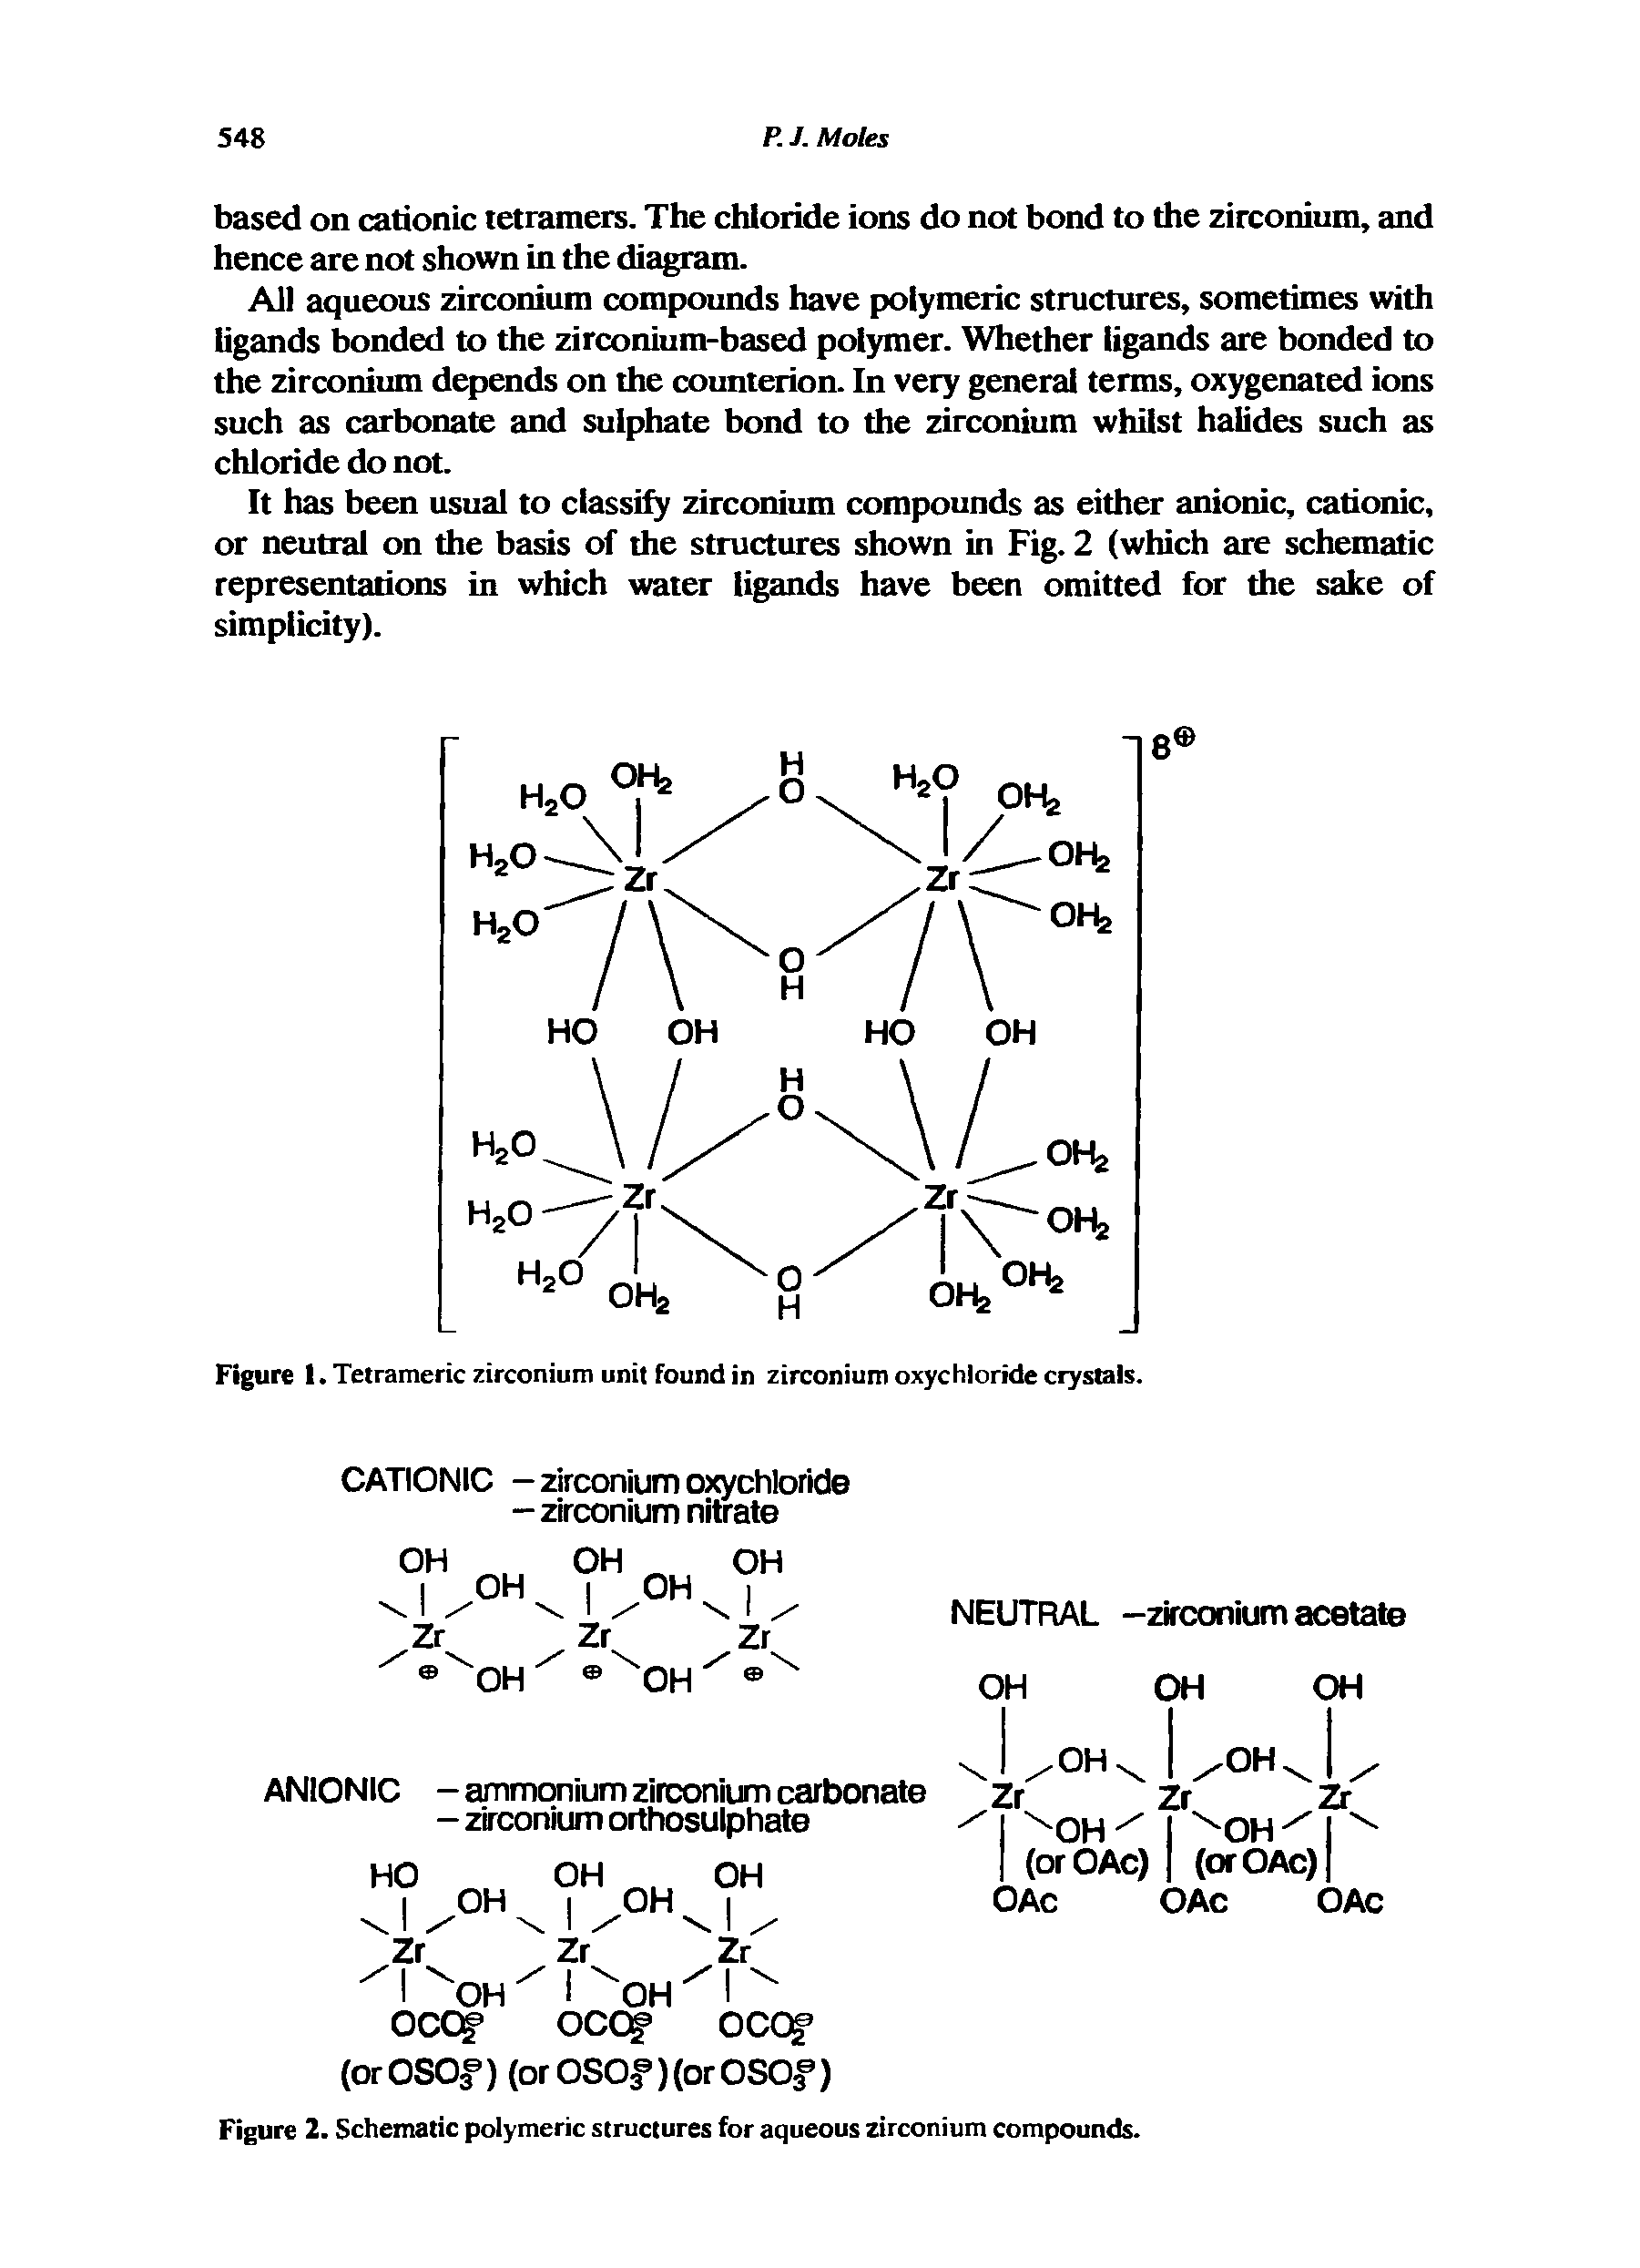 Figure 1. Tetrameric zirconium unit found in zirconium oxychloride crystals.